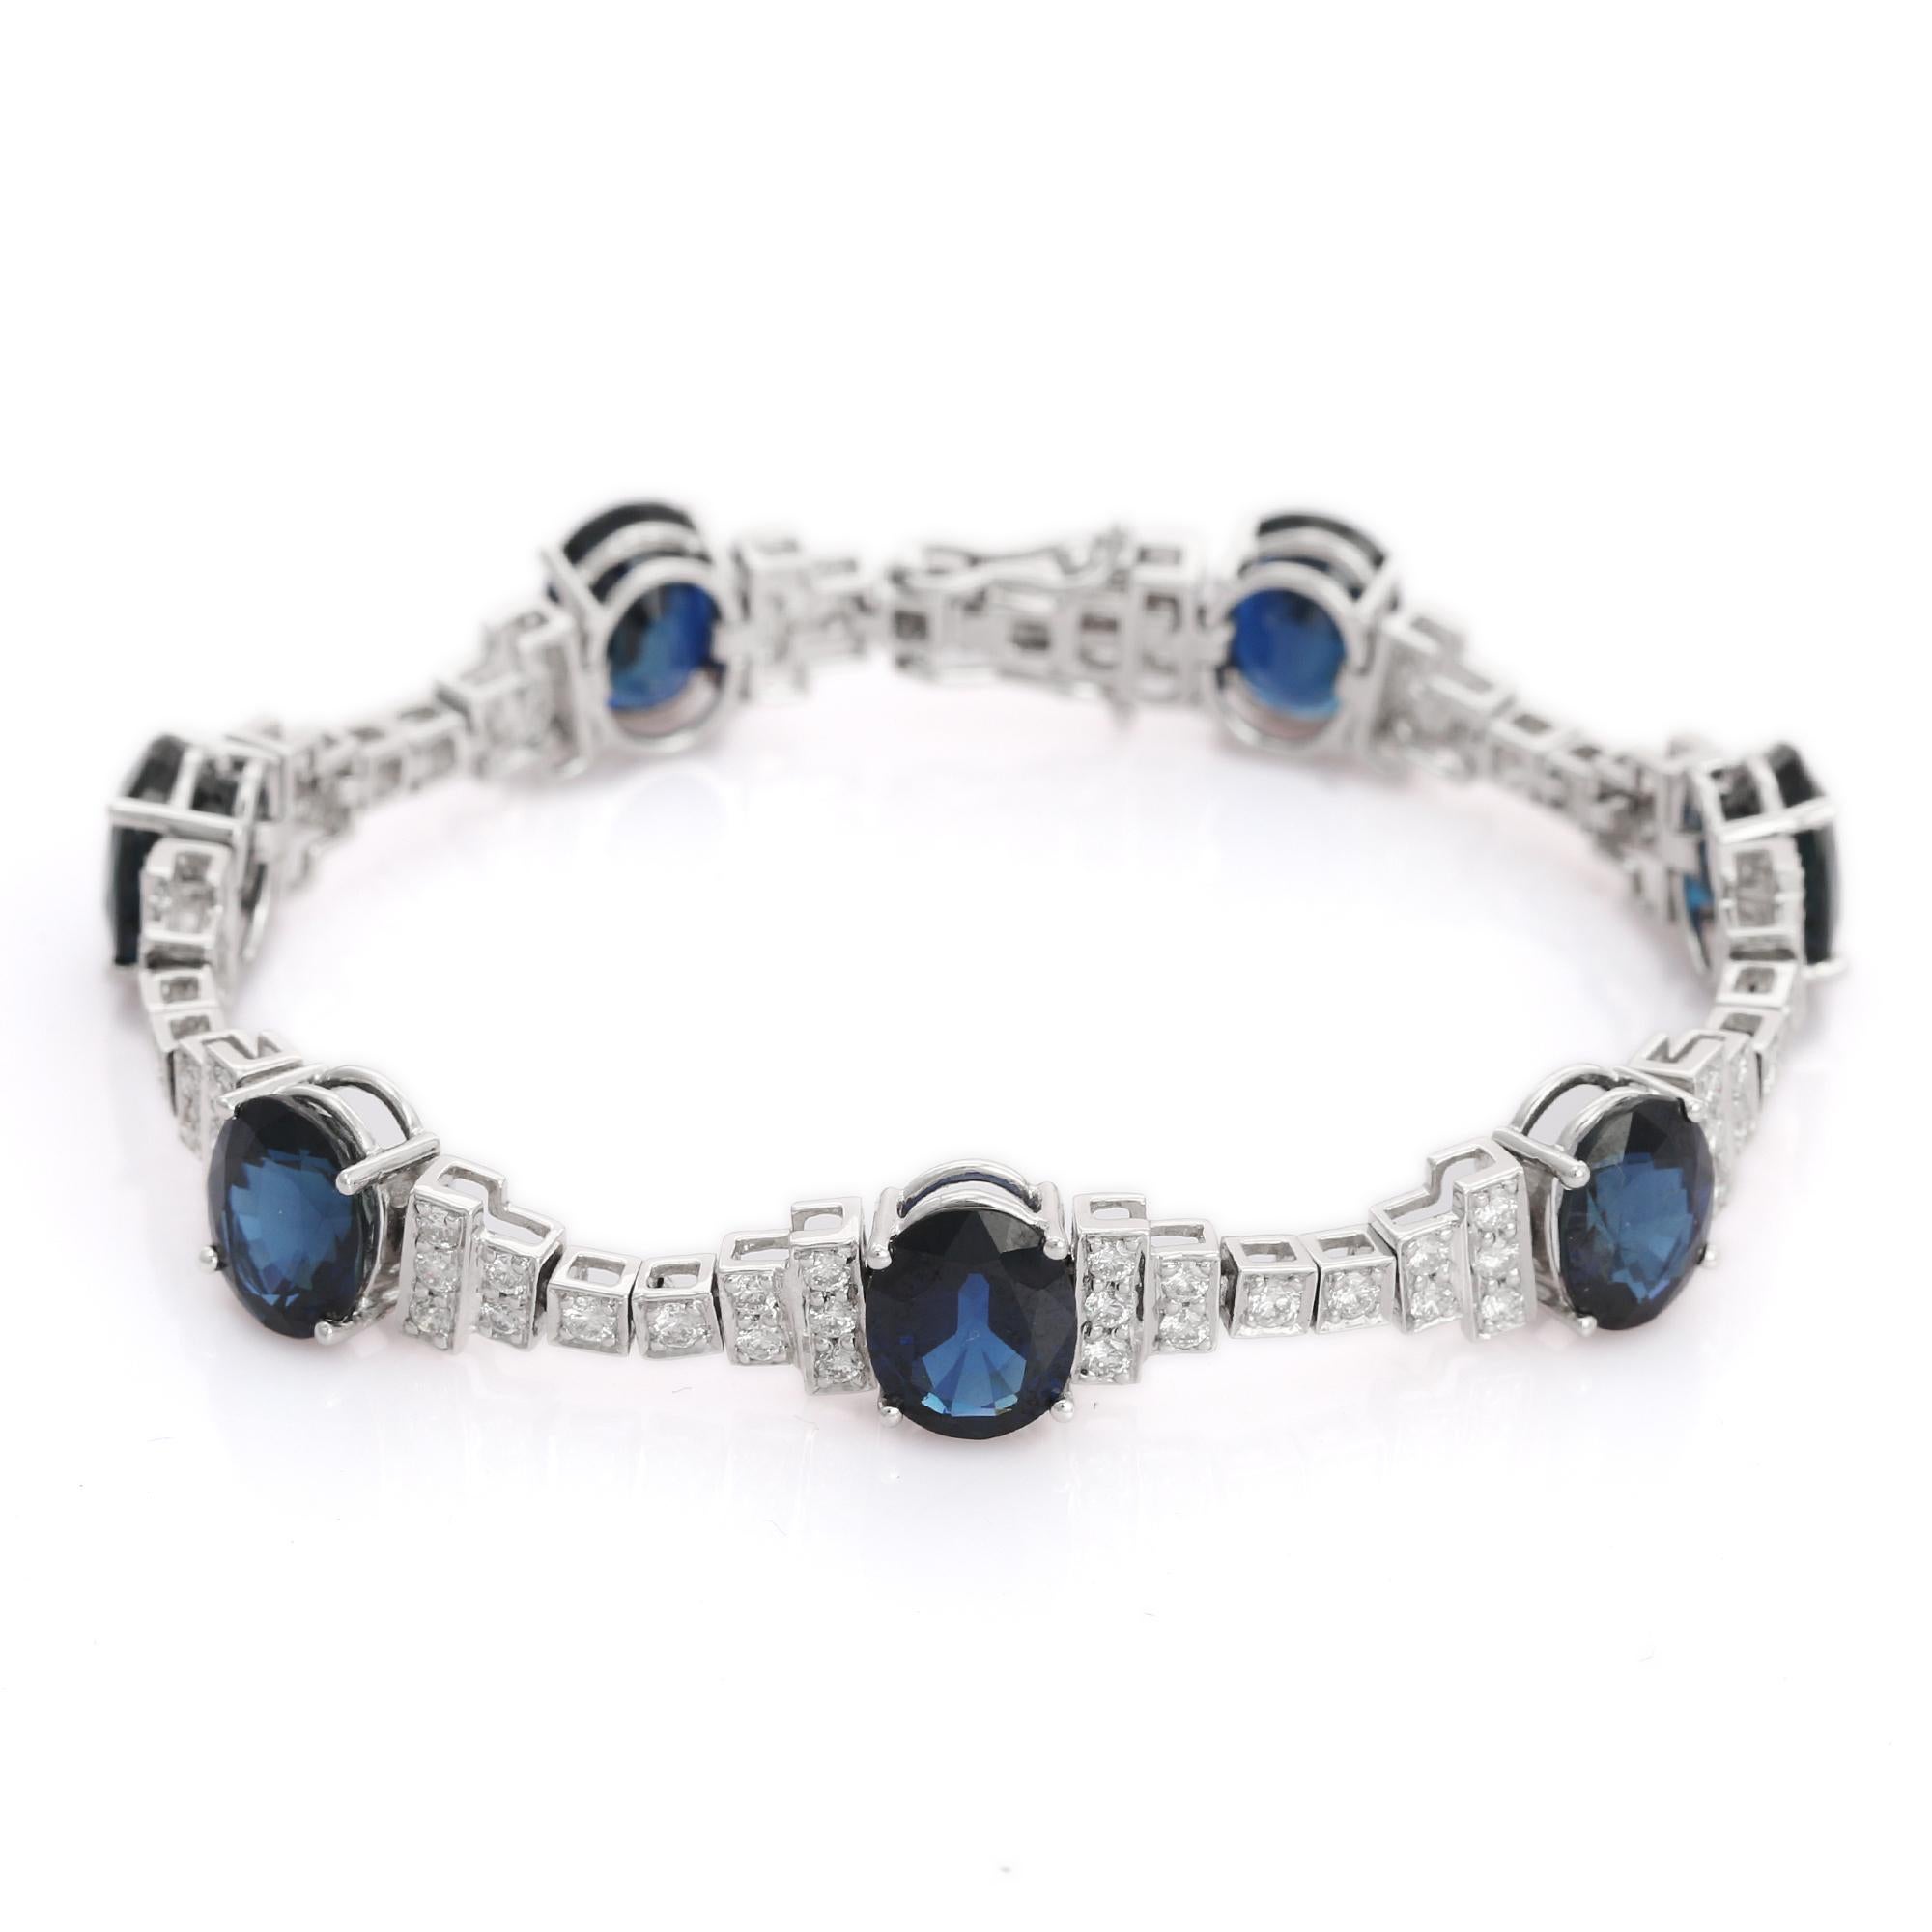 24 Carat Blue Sapphire Wedding Tennis Bracelet in 18K White Gold with Diamonds For Sale 1